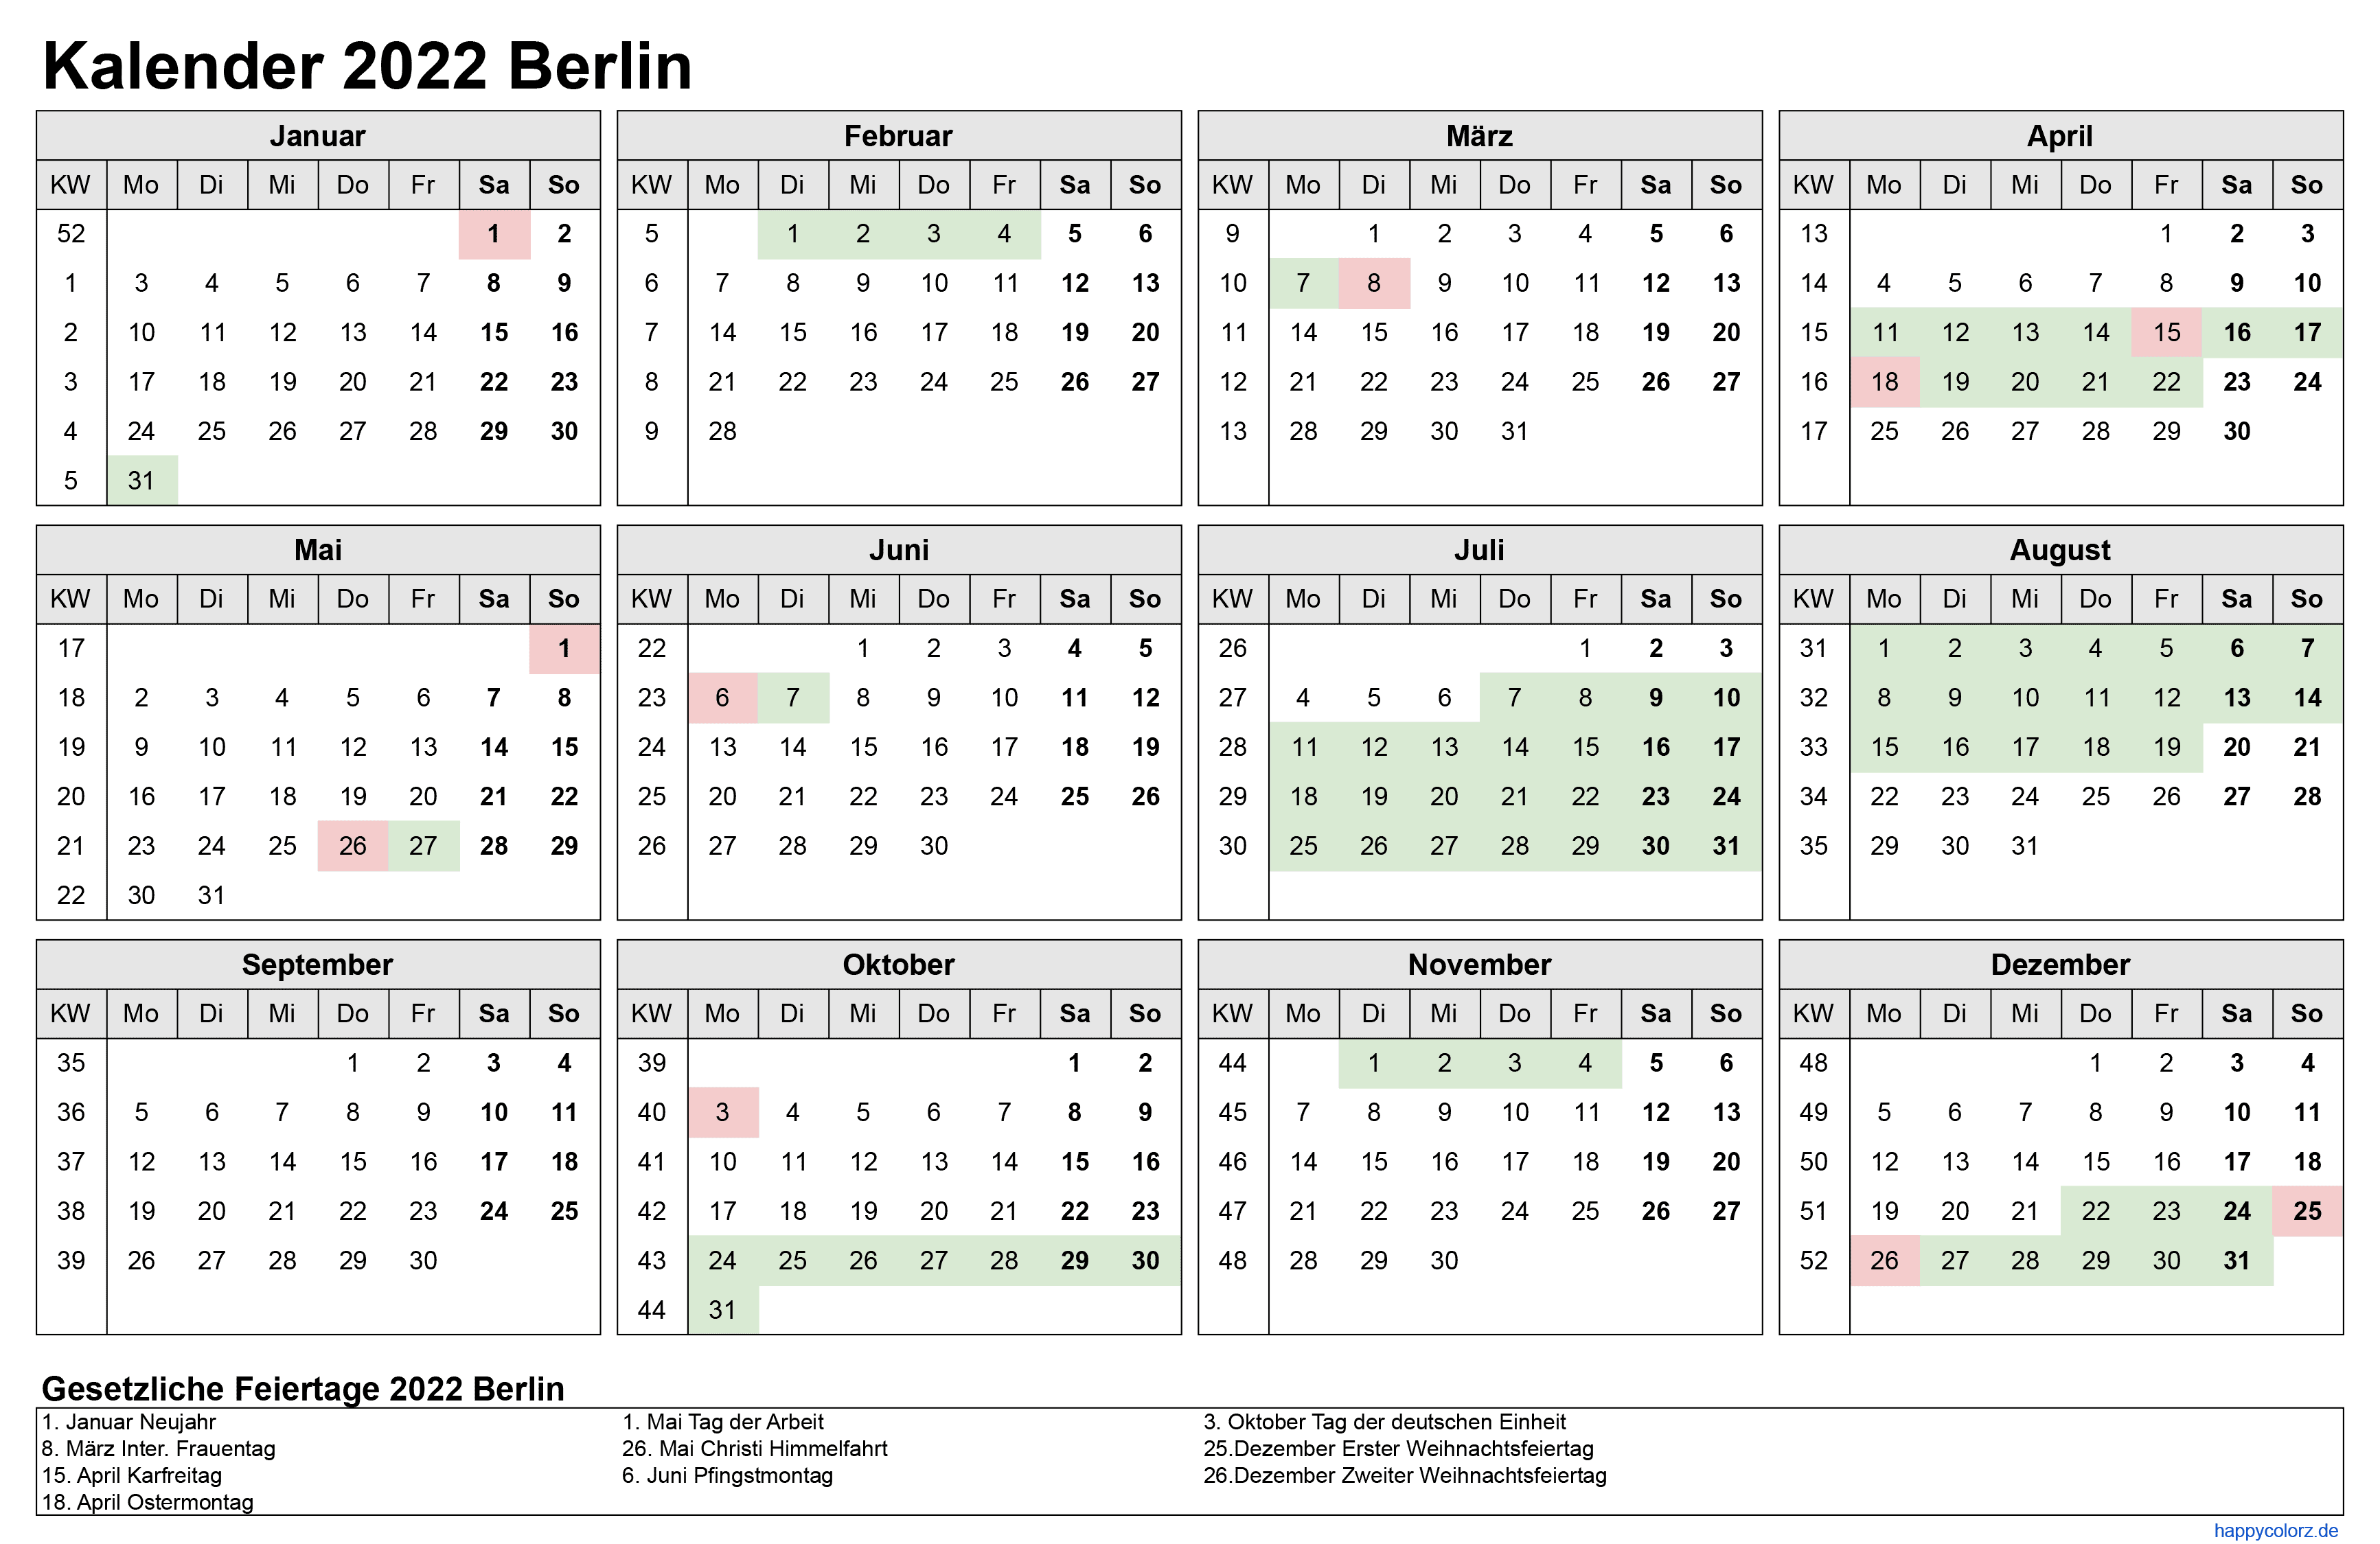 Kalender 2022 Berlin zum Ausdrucken